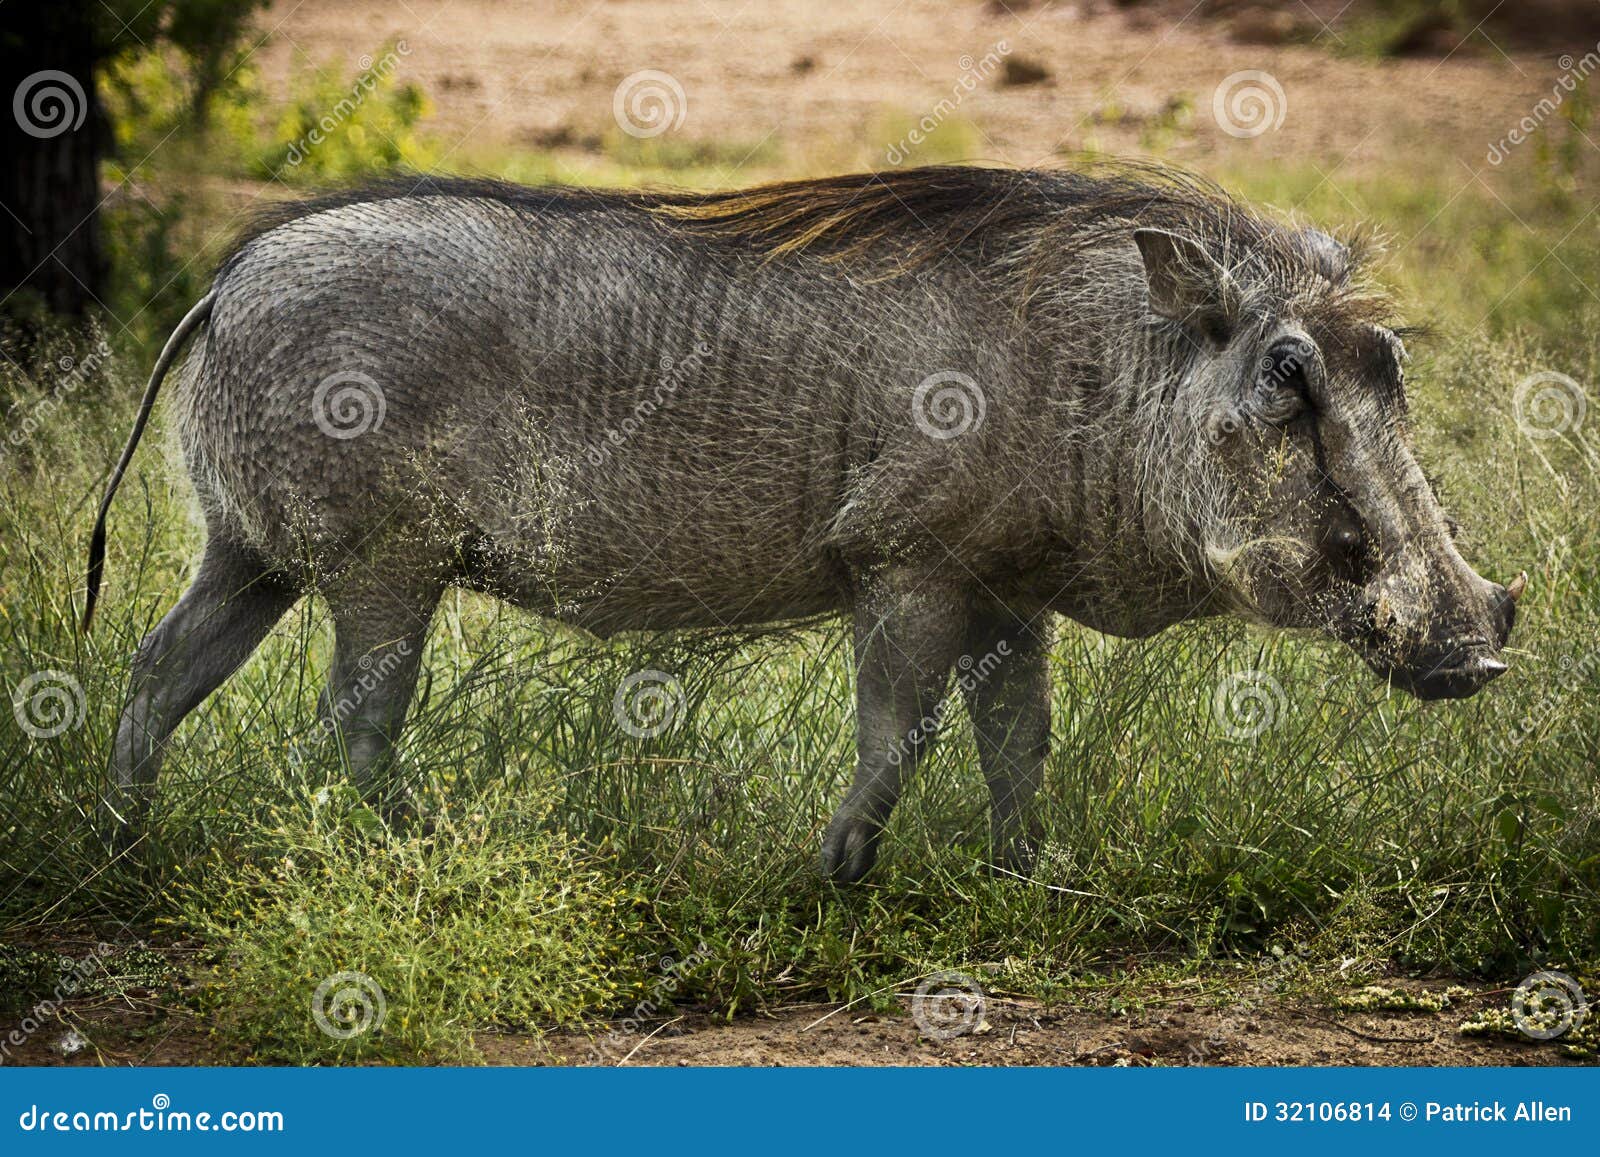 adult male warthog